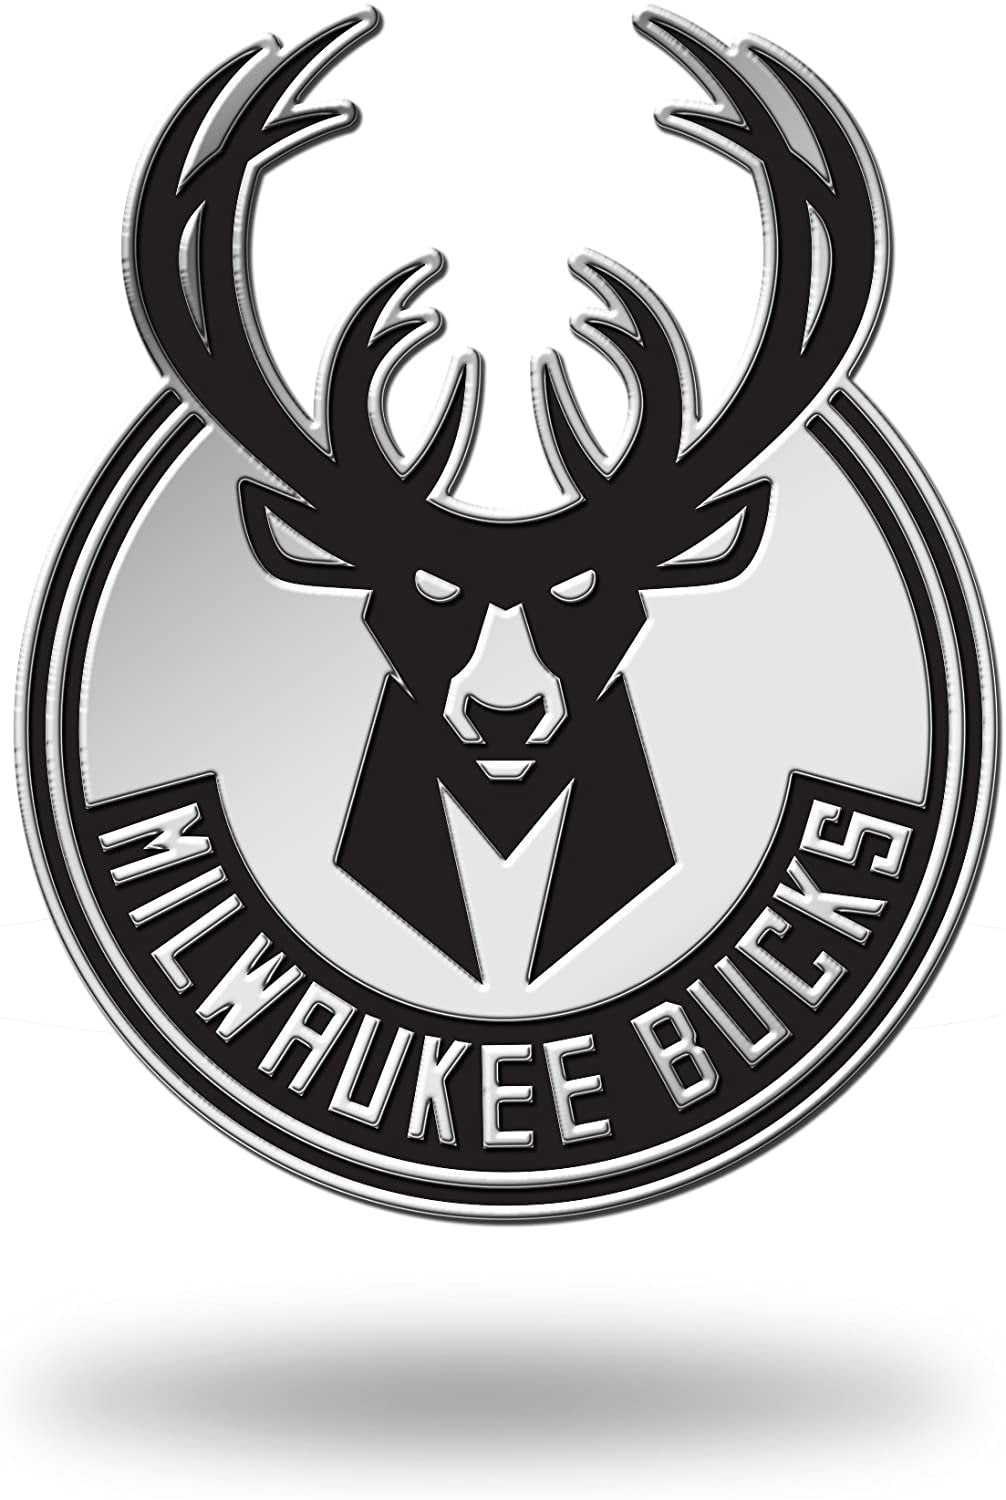 Milwaukee Bucks Silver Chrome Color Auto Emblem, Raised Molded Plastic, 3.5 Inch, Adhesive Tape Backing